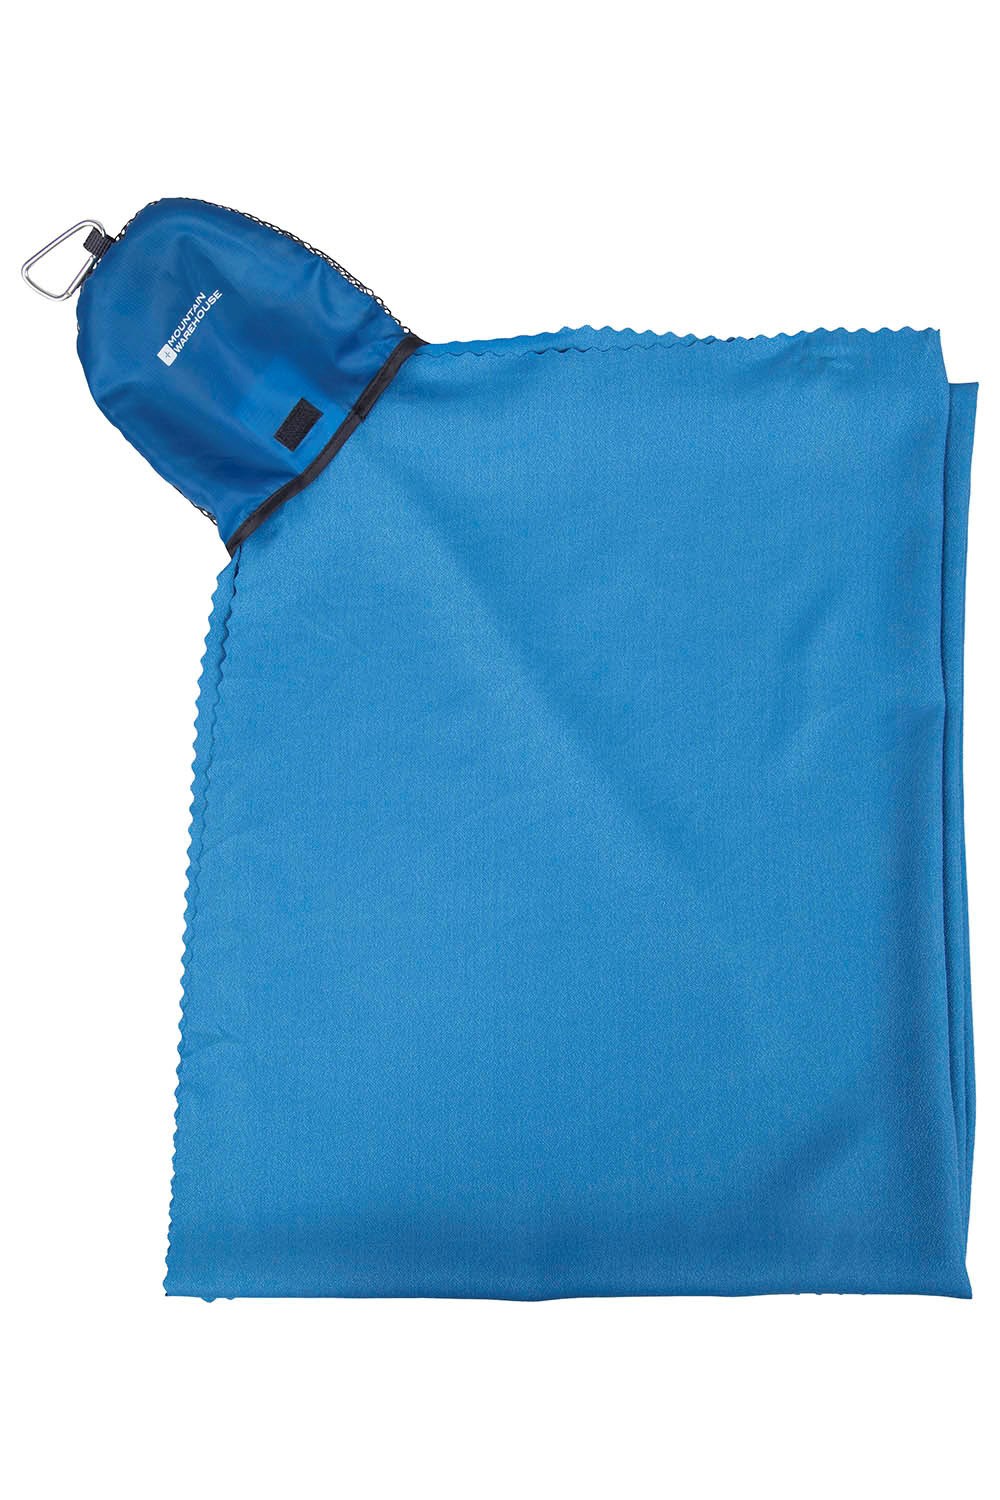 Mountain Warehouse Clip Travel Towel - Large - 70 x 130cm | eBay